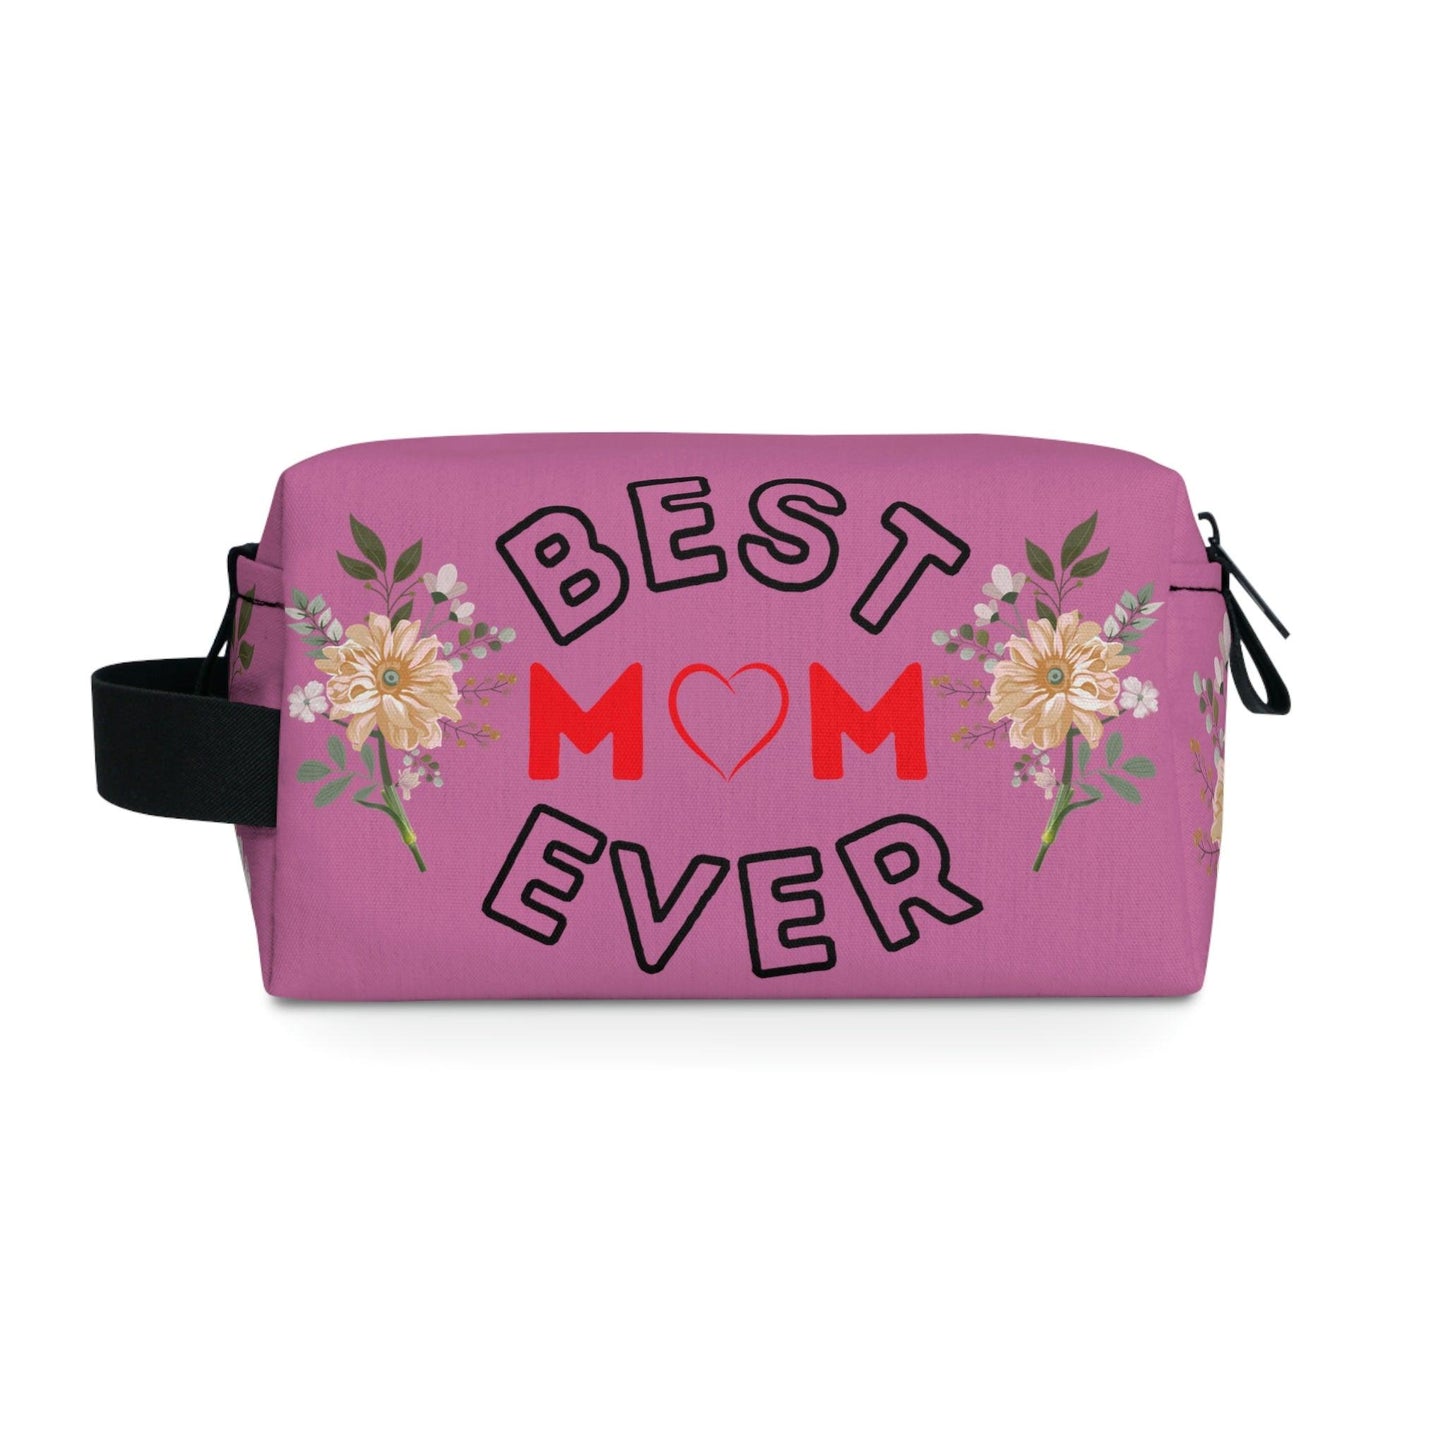 Travel Cosmetic Bag | Travel bag | Toiletry Bag Women | Best Mom Ever Makeup Bag | Cute makeup bag | Makeup pouch | Aesthetic makeup bag